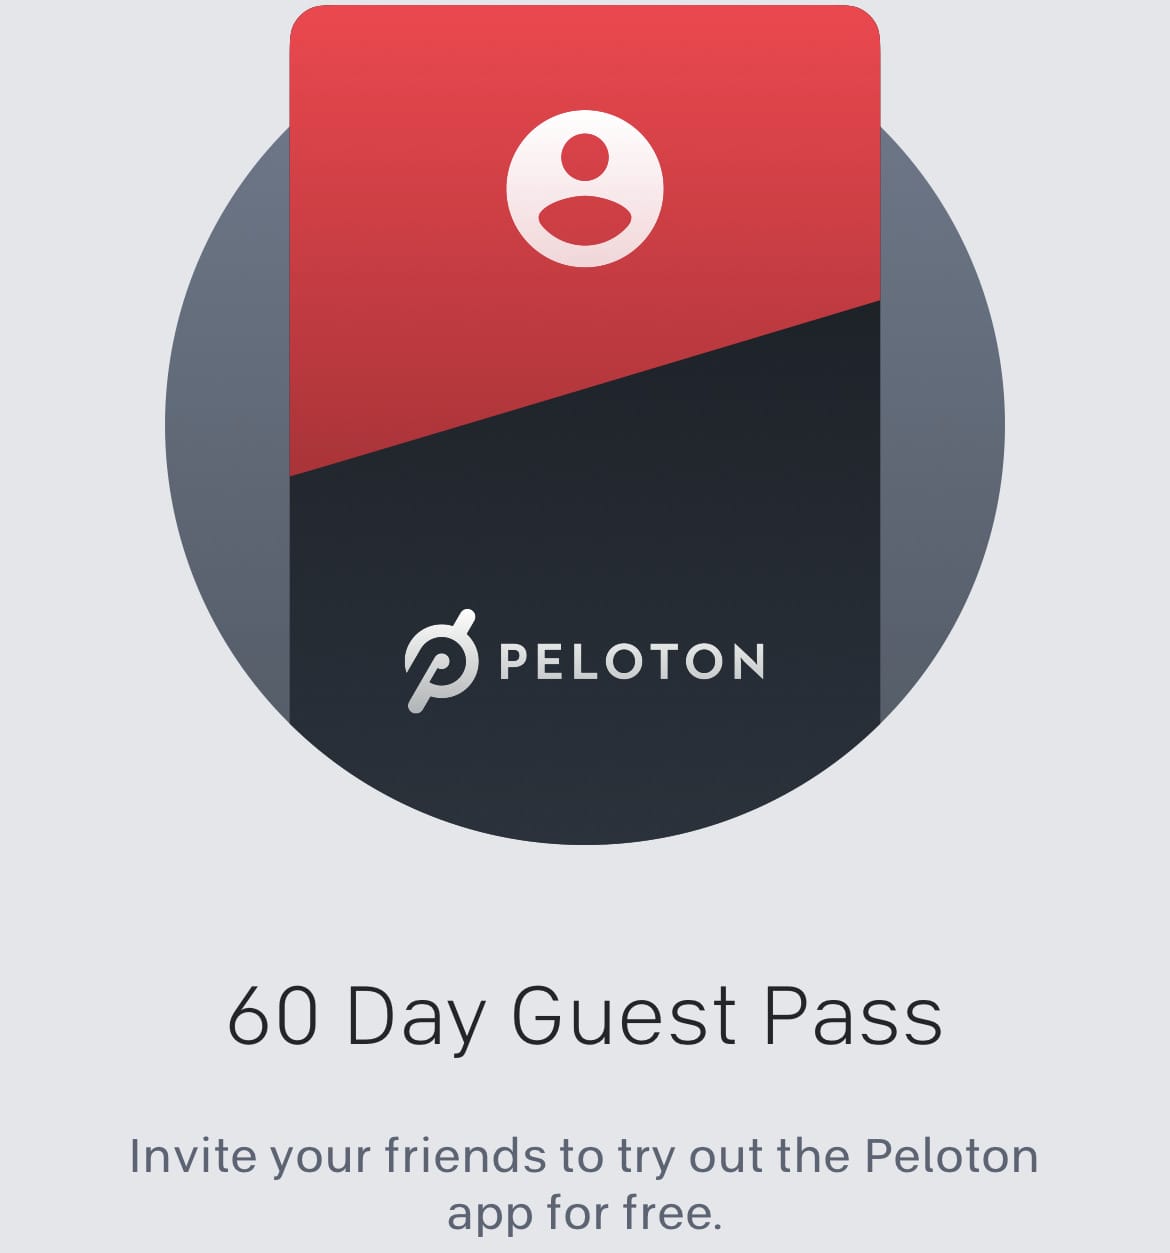 Peloton Guest Pass [60 Day Free App Trial] launching - Peloton Buddy